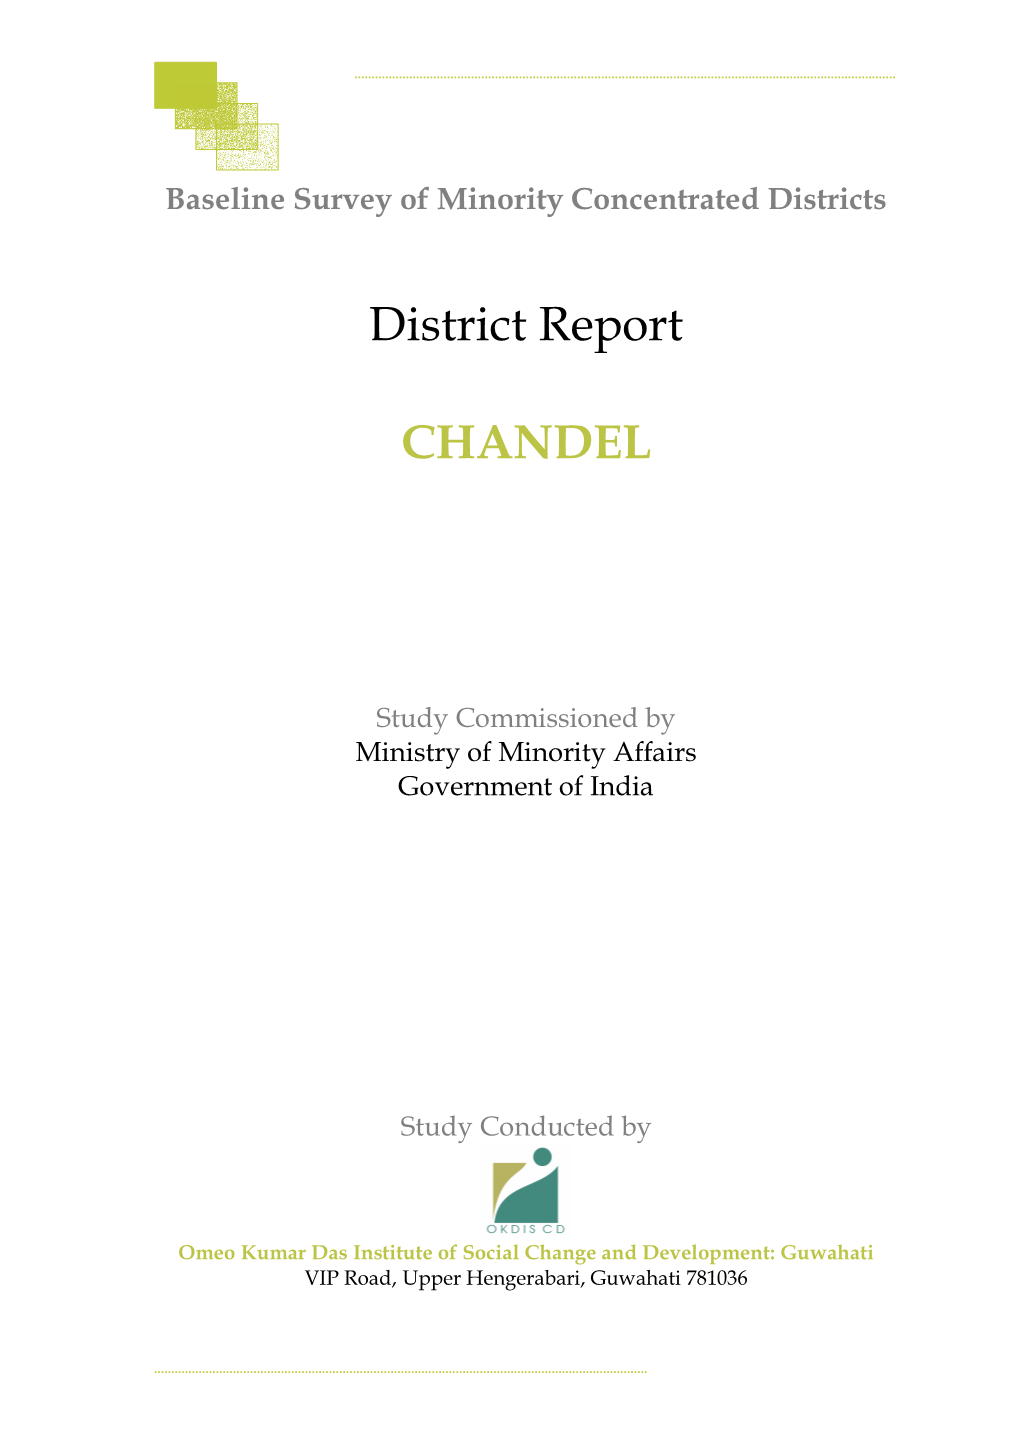 District Report CHANDEL